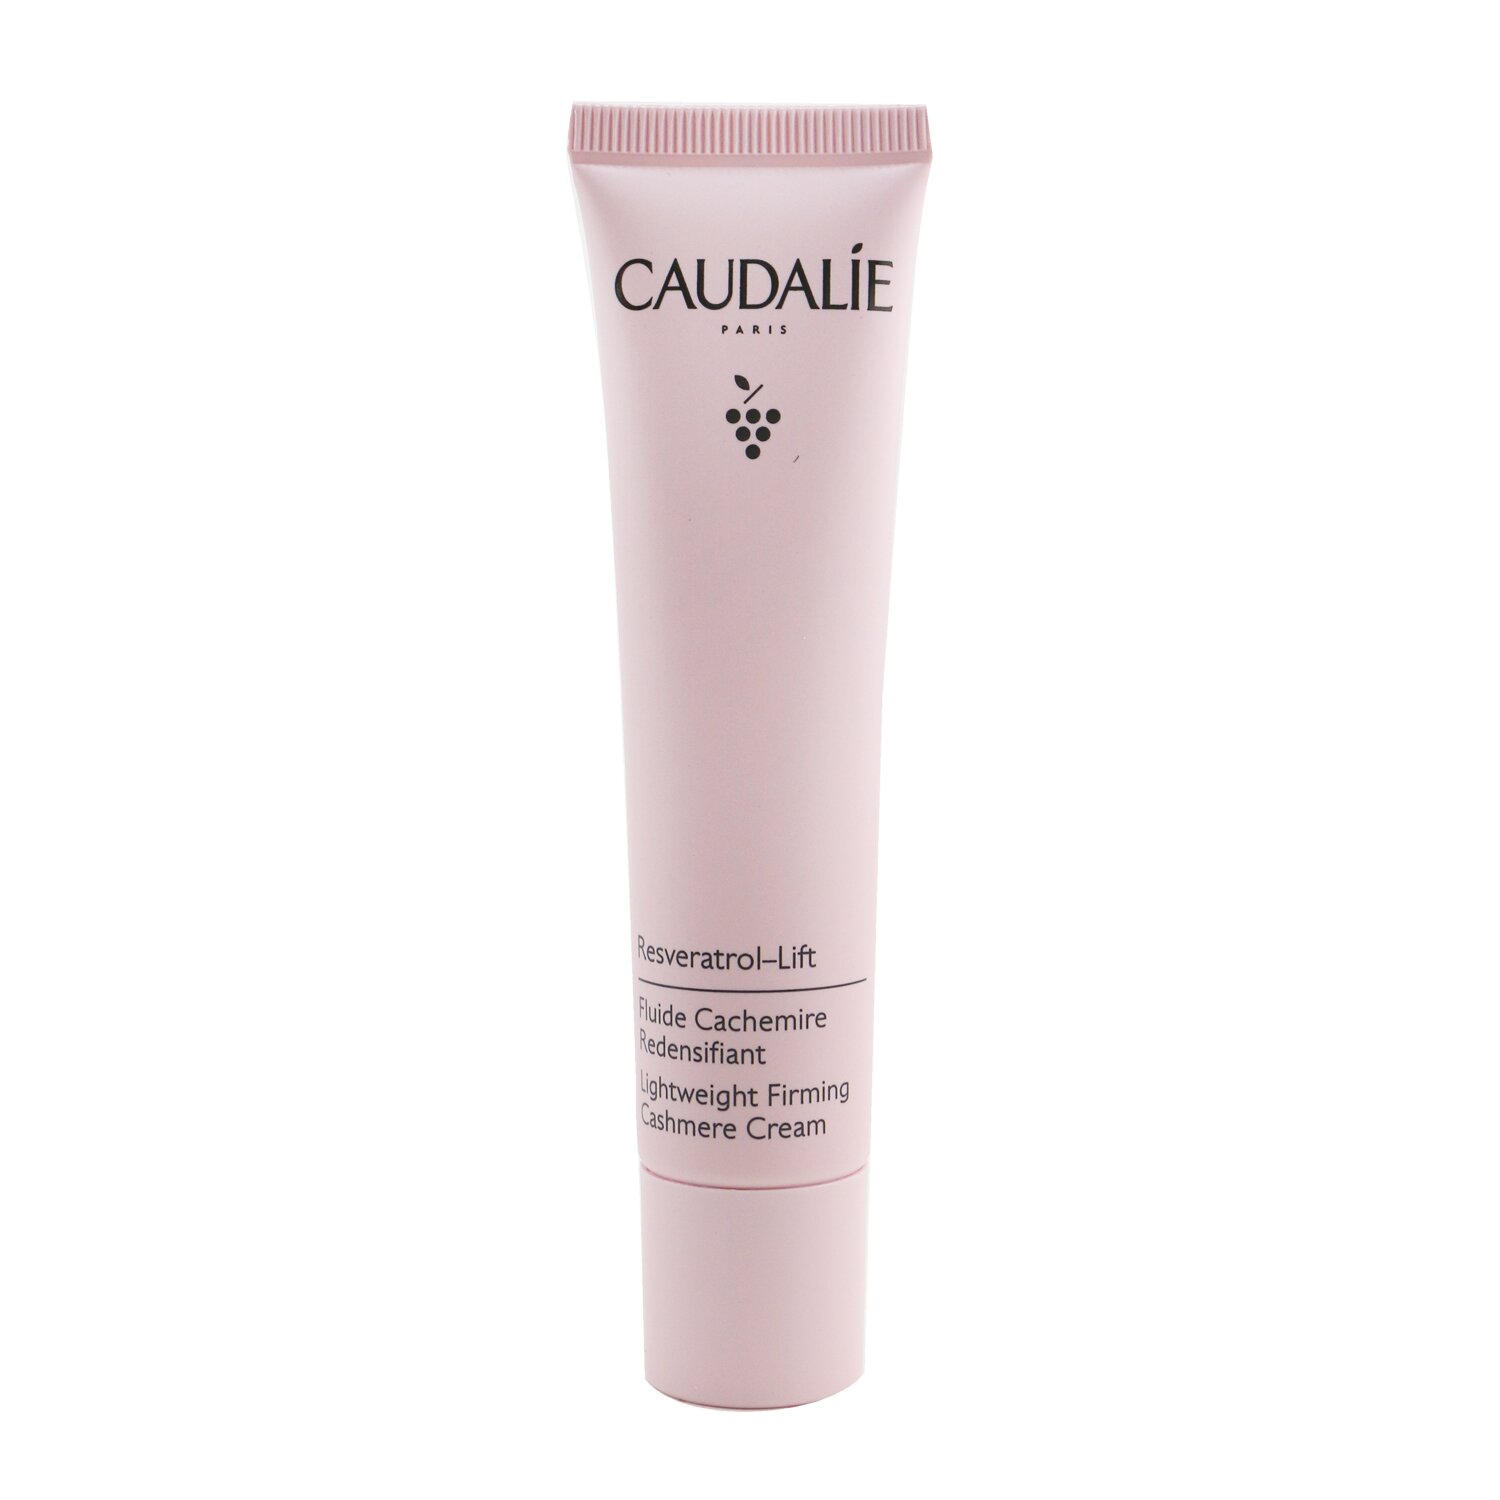 Caudalie Resveratrol Lift Lightweight Firming Cashmere Cream